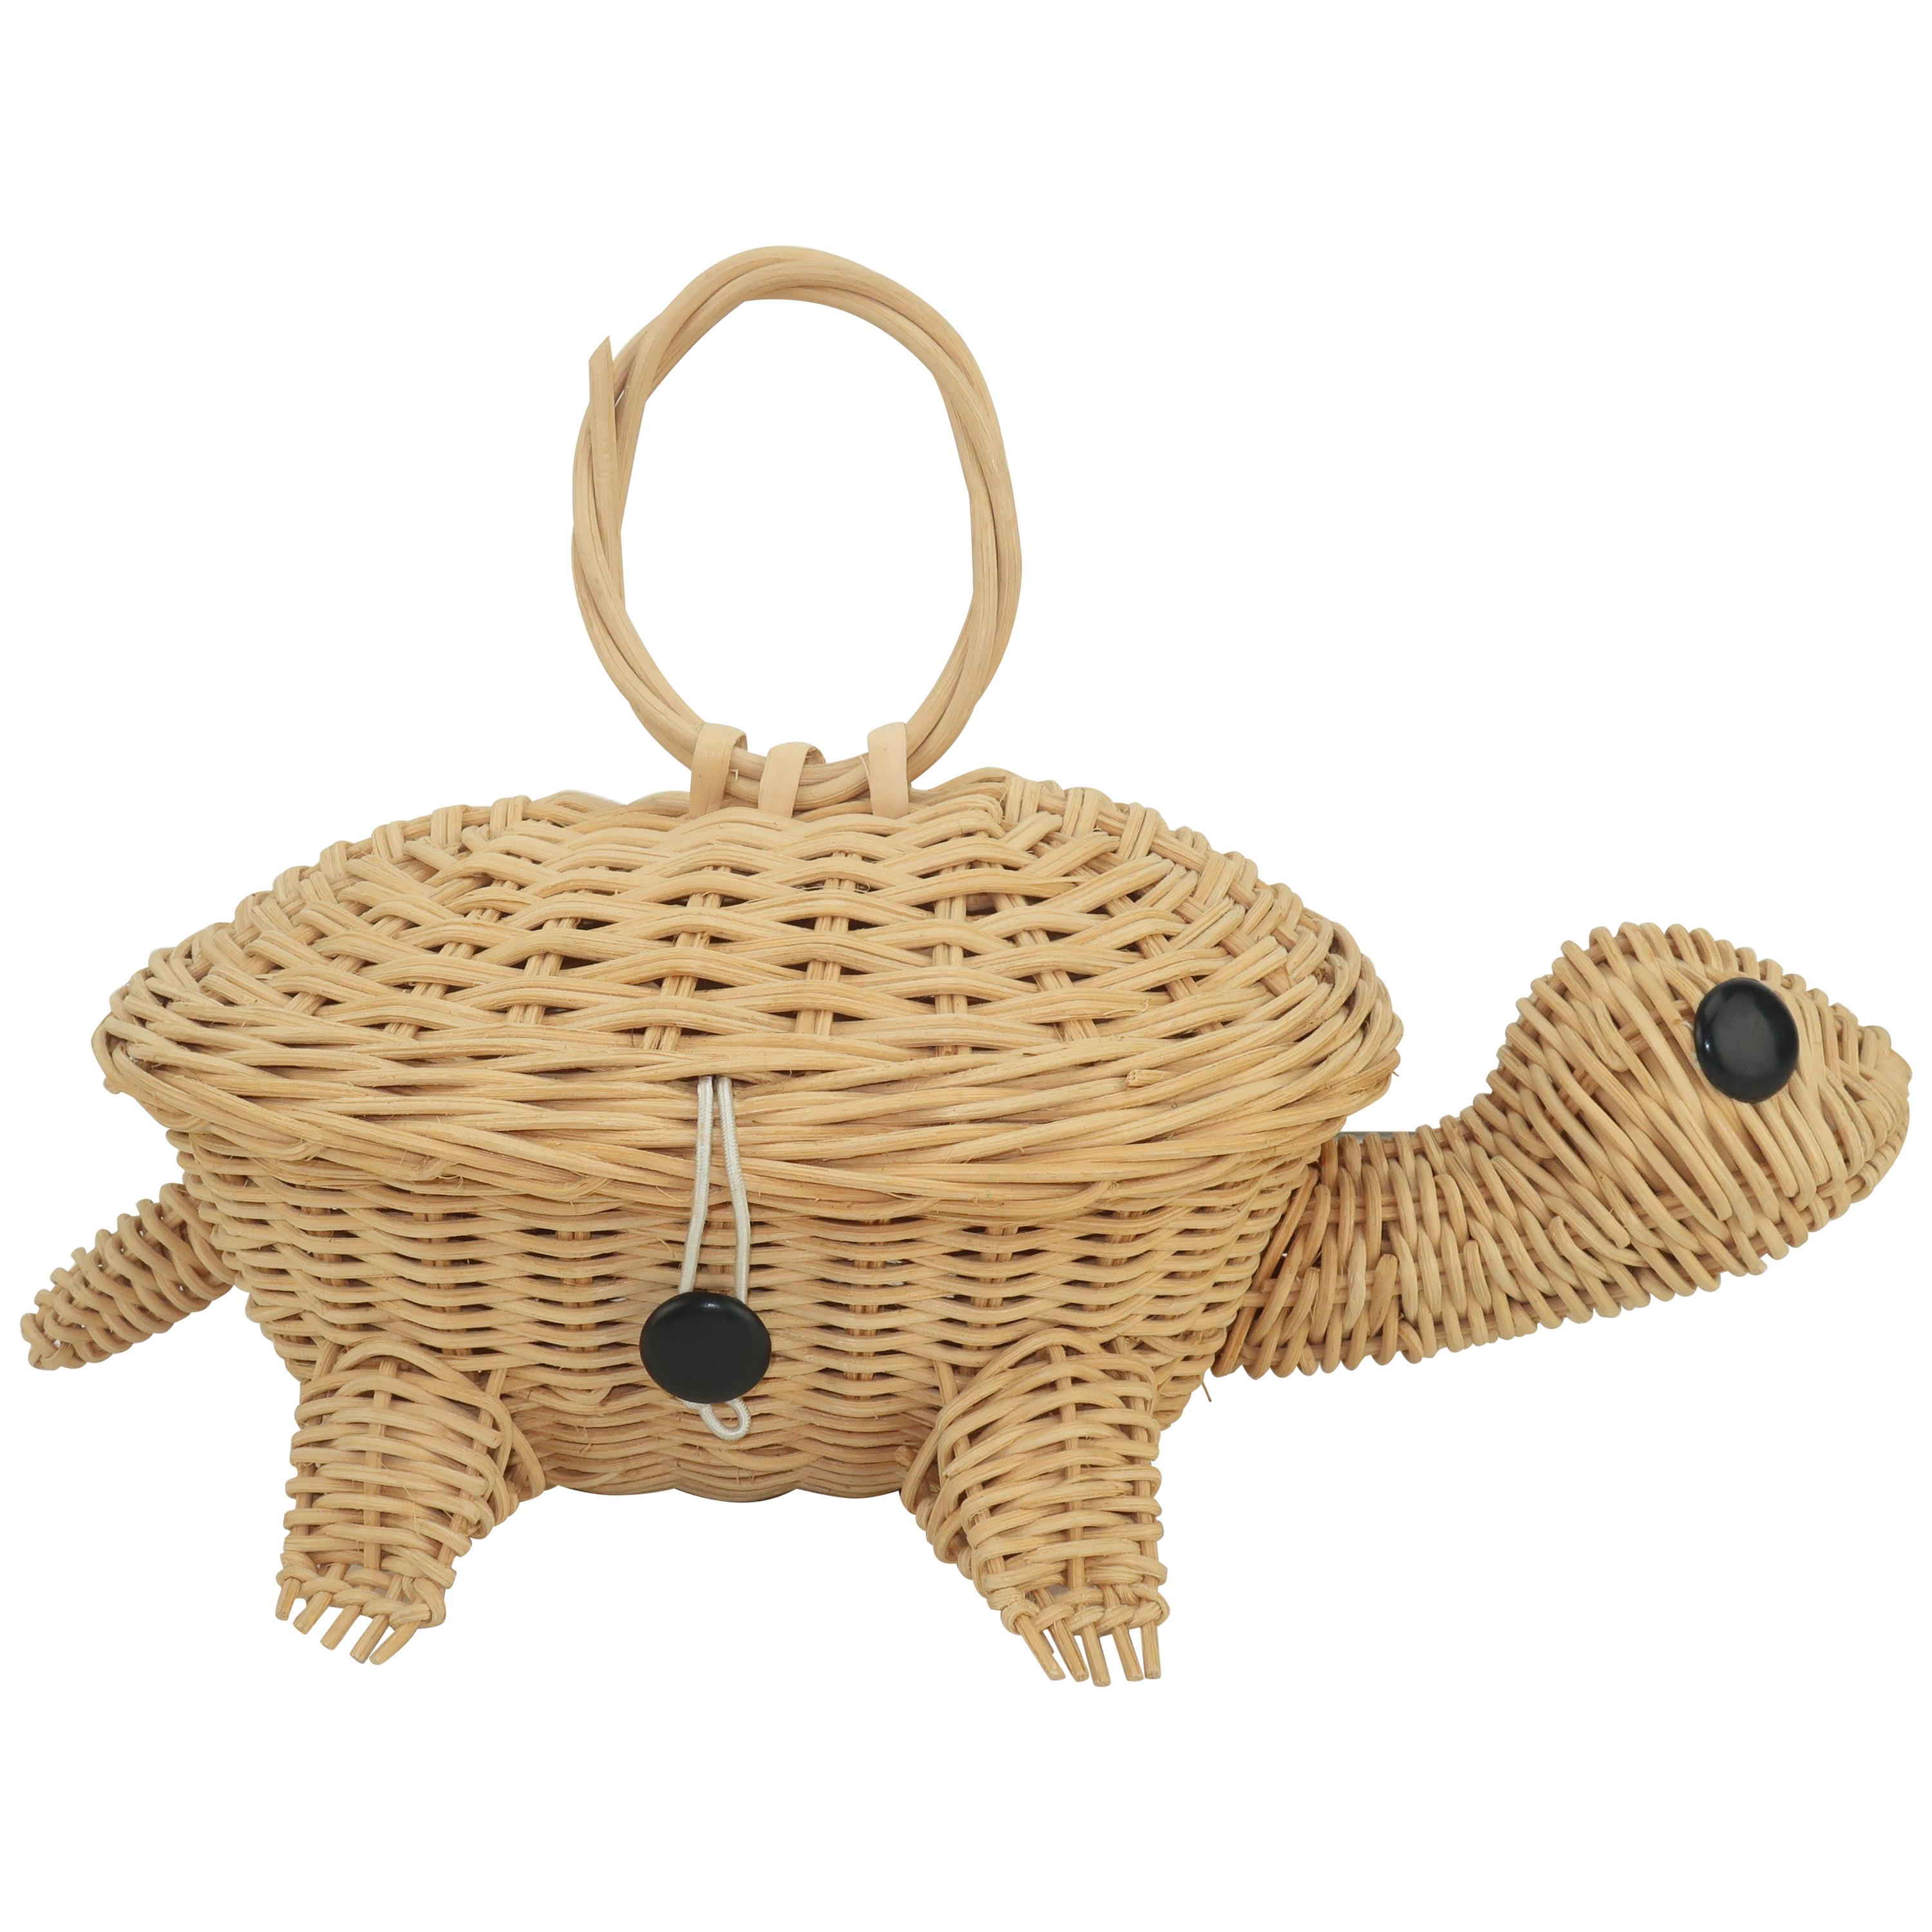 Turtle Wicker Basket Novelty Handbag, 1960's